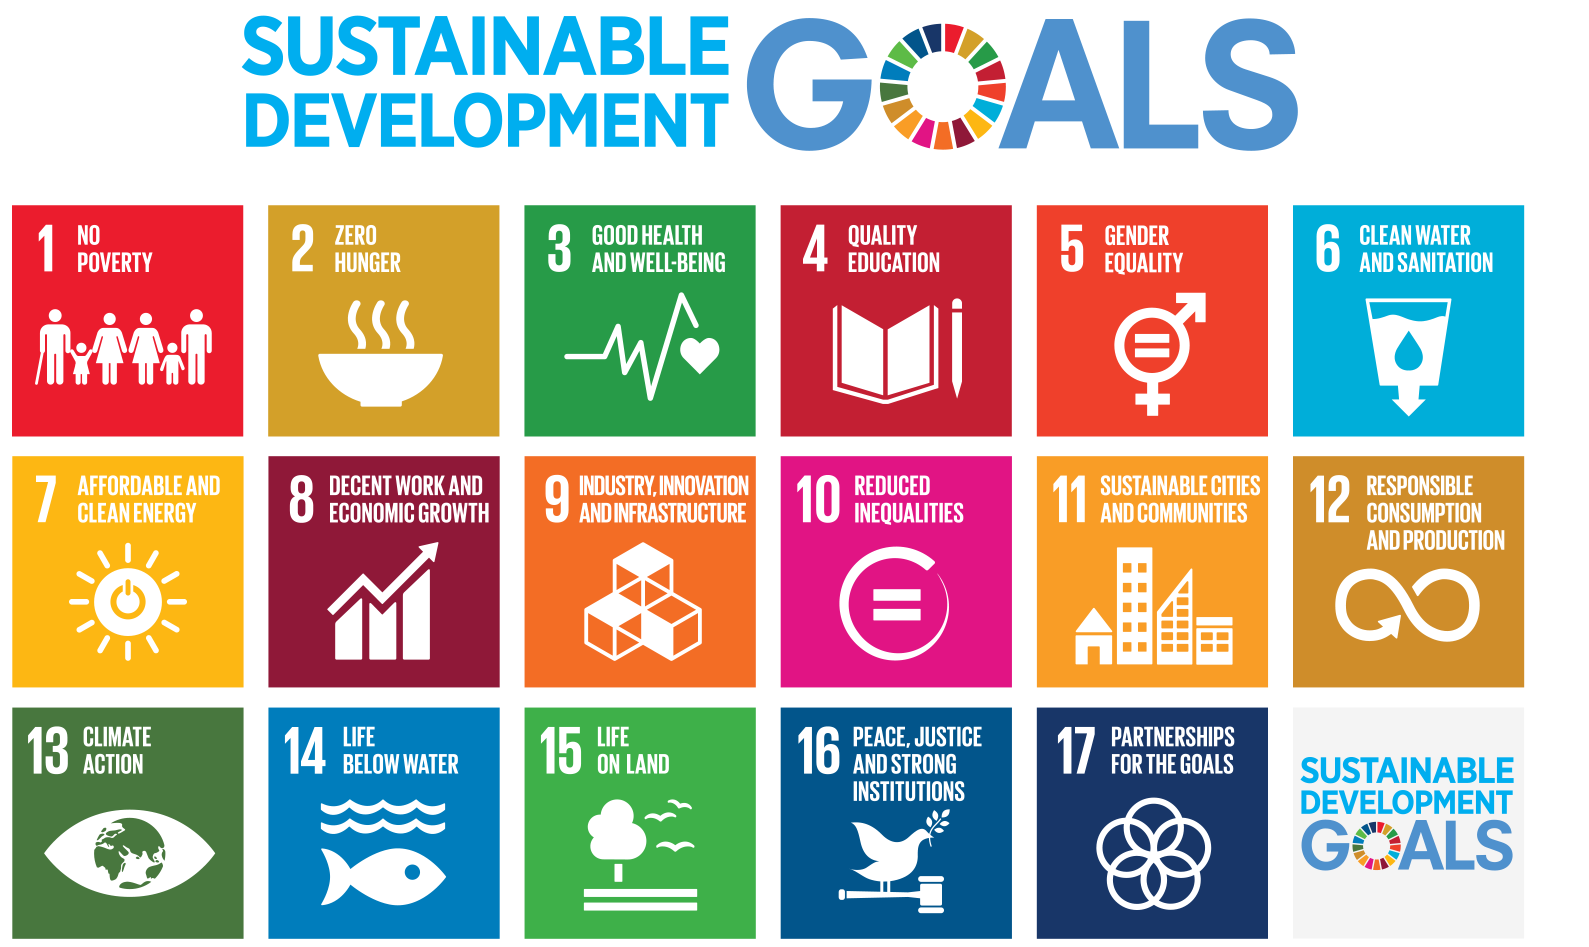 SDG image